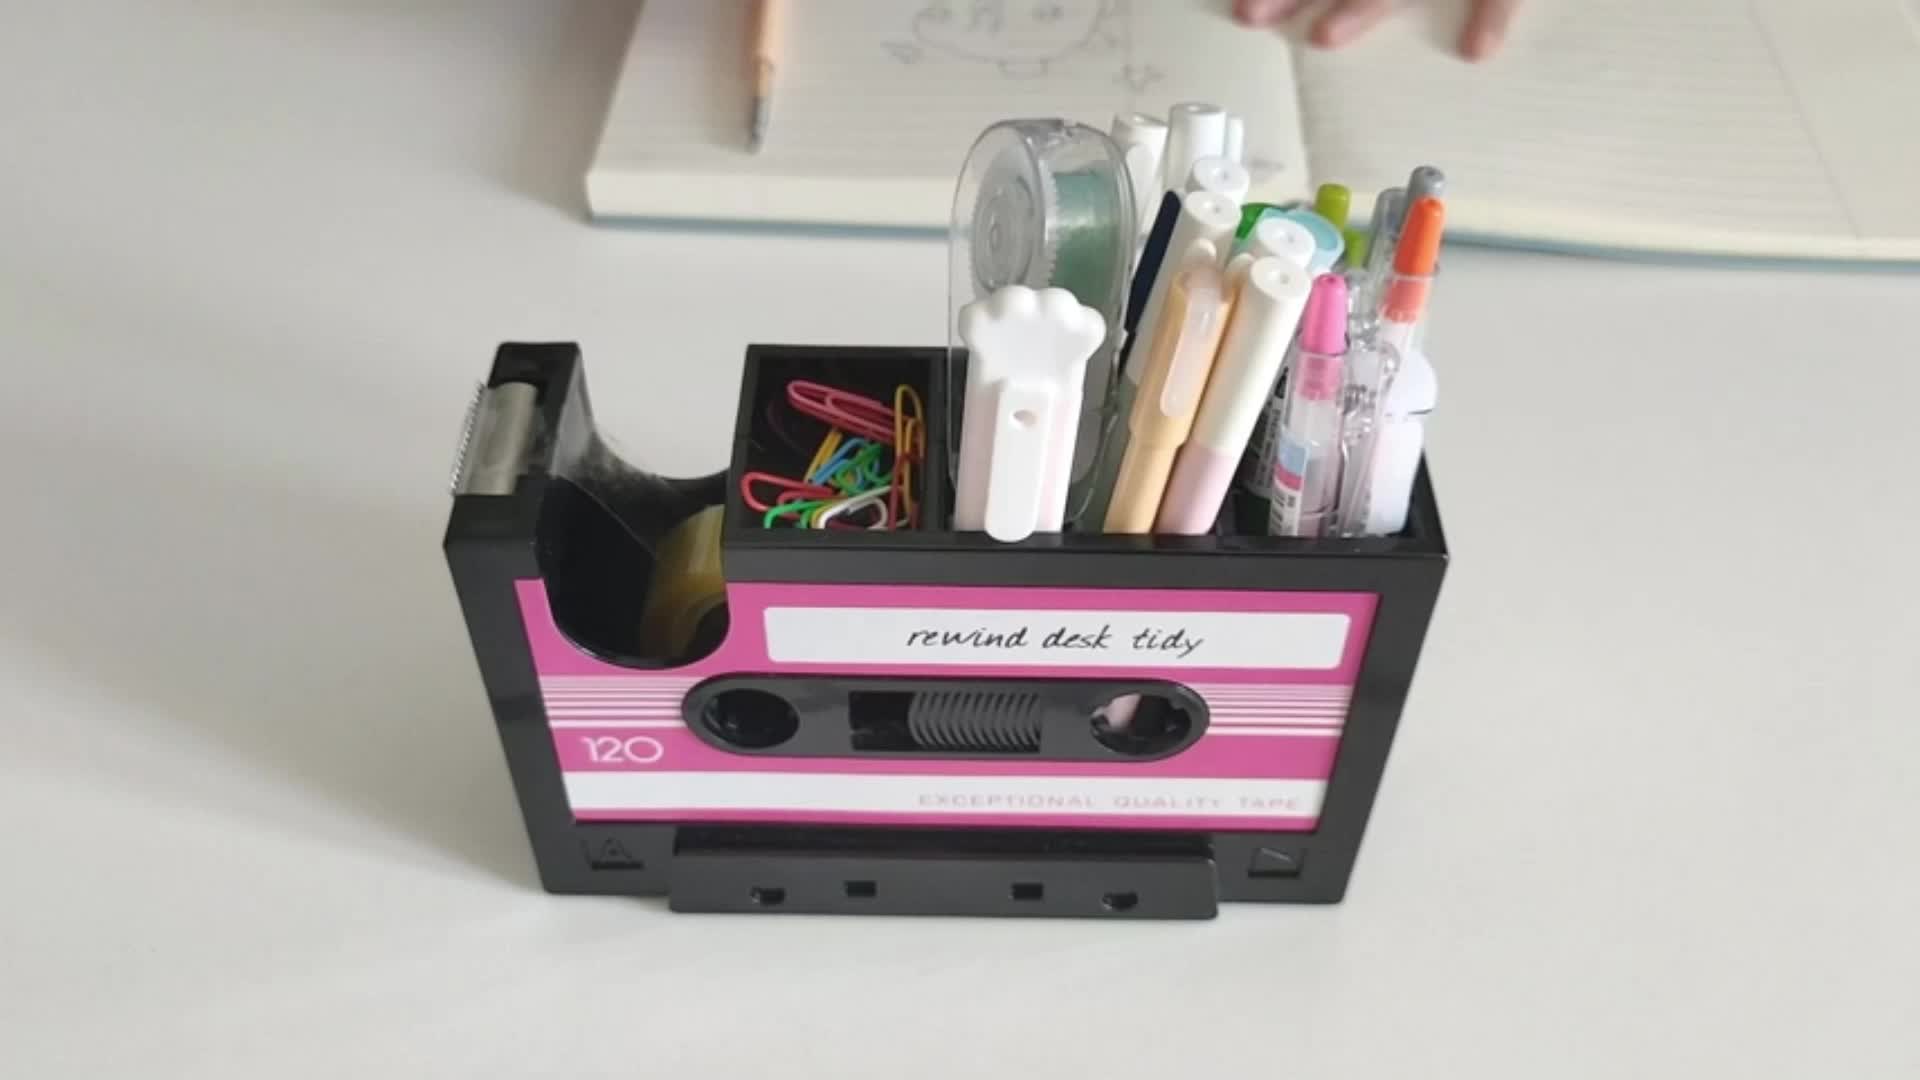 Retro Cassette Adhesive Tape Pen Holder Case, Office Stationery Storage  Box, Plastic Pencil Case Desk Tidy Creative Organizer, for Storing Pen  Pencil